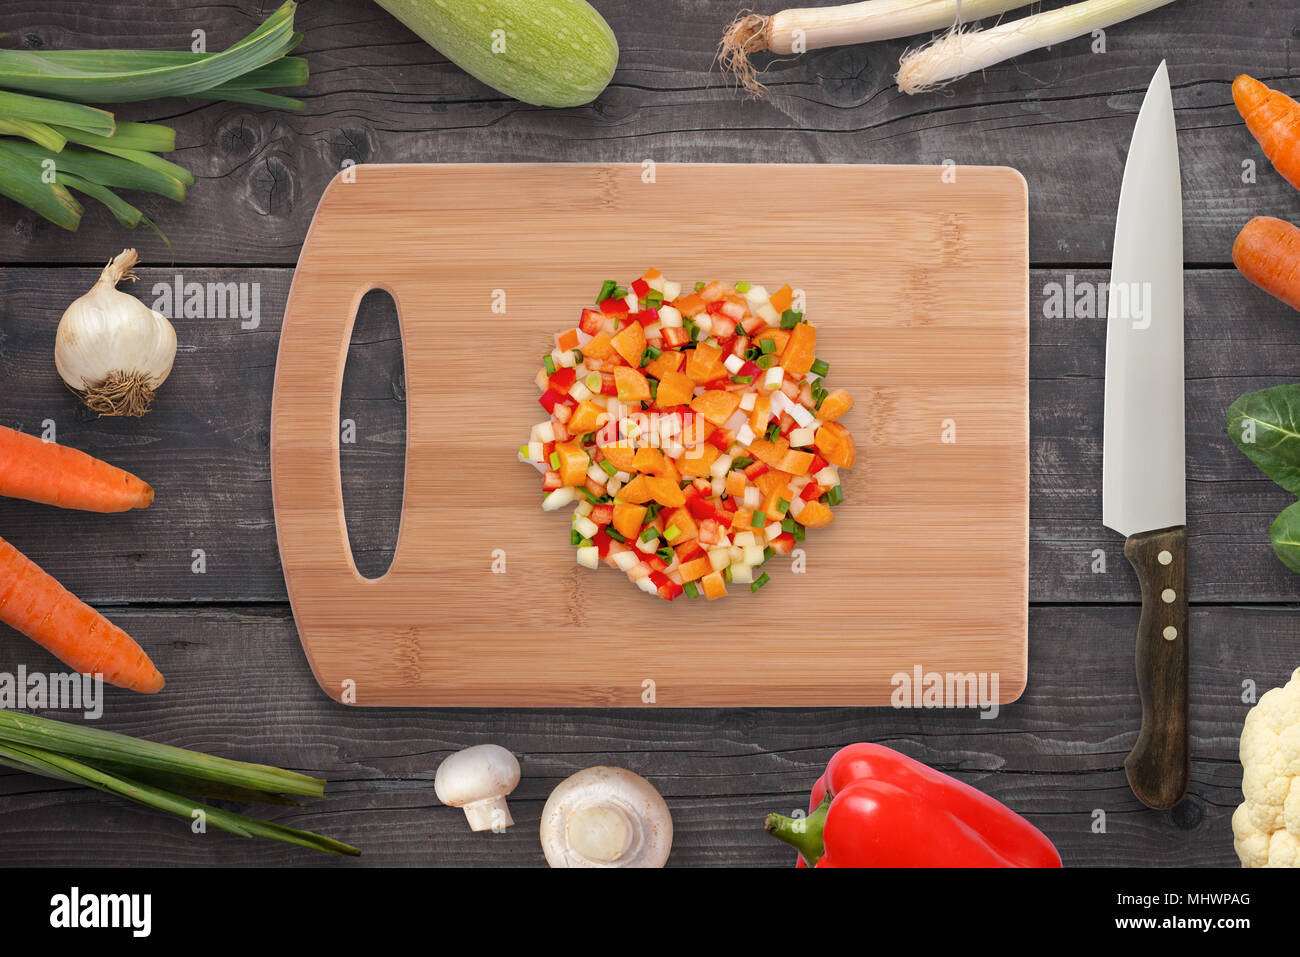 https://c8.alamy.com/comp/MHWPAG/chopped-vegetables-on-cutting-board-onion-mushrooms-carrot-pepper-beside-MHWPAG.jpg